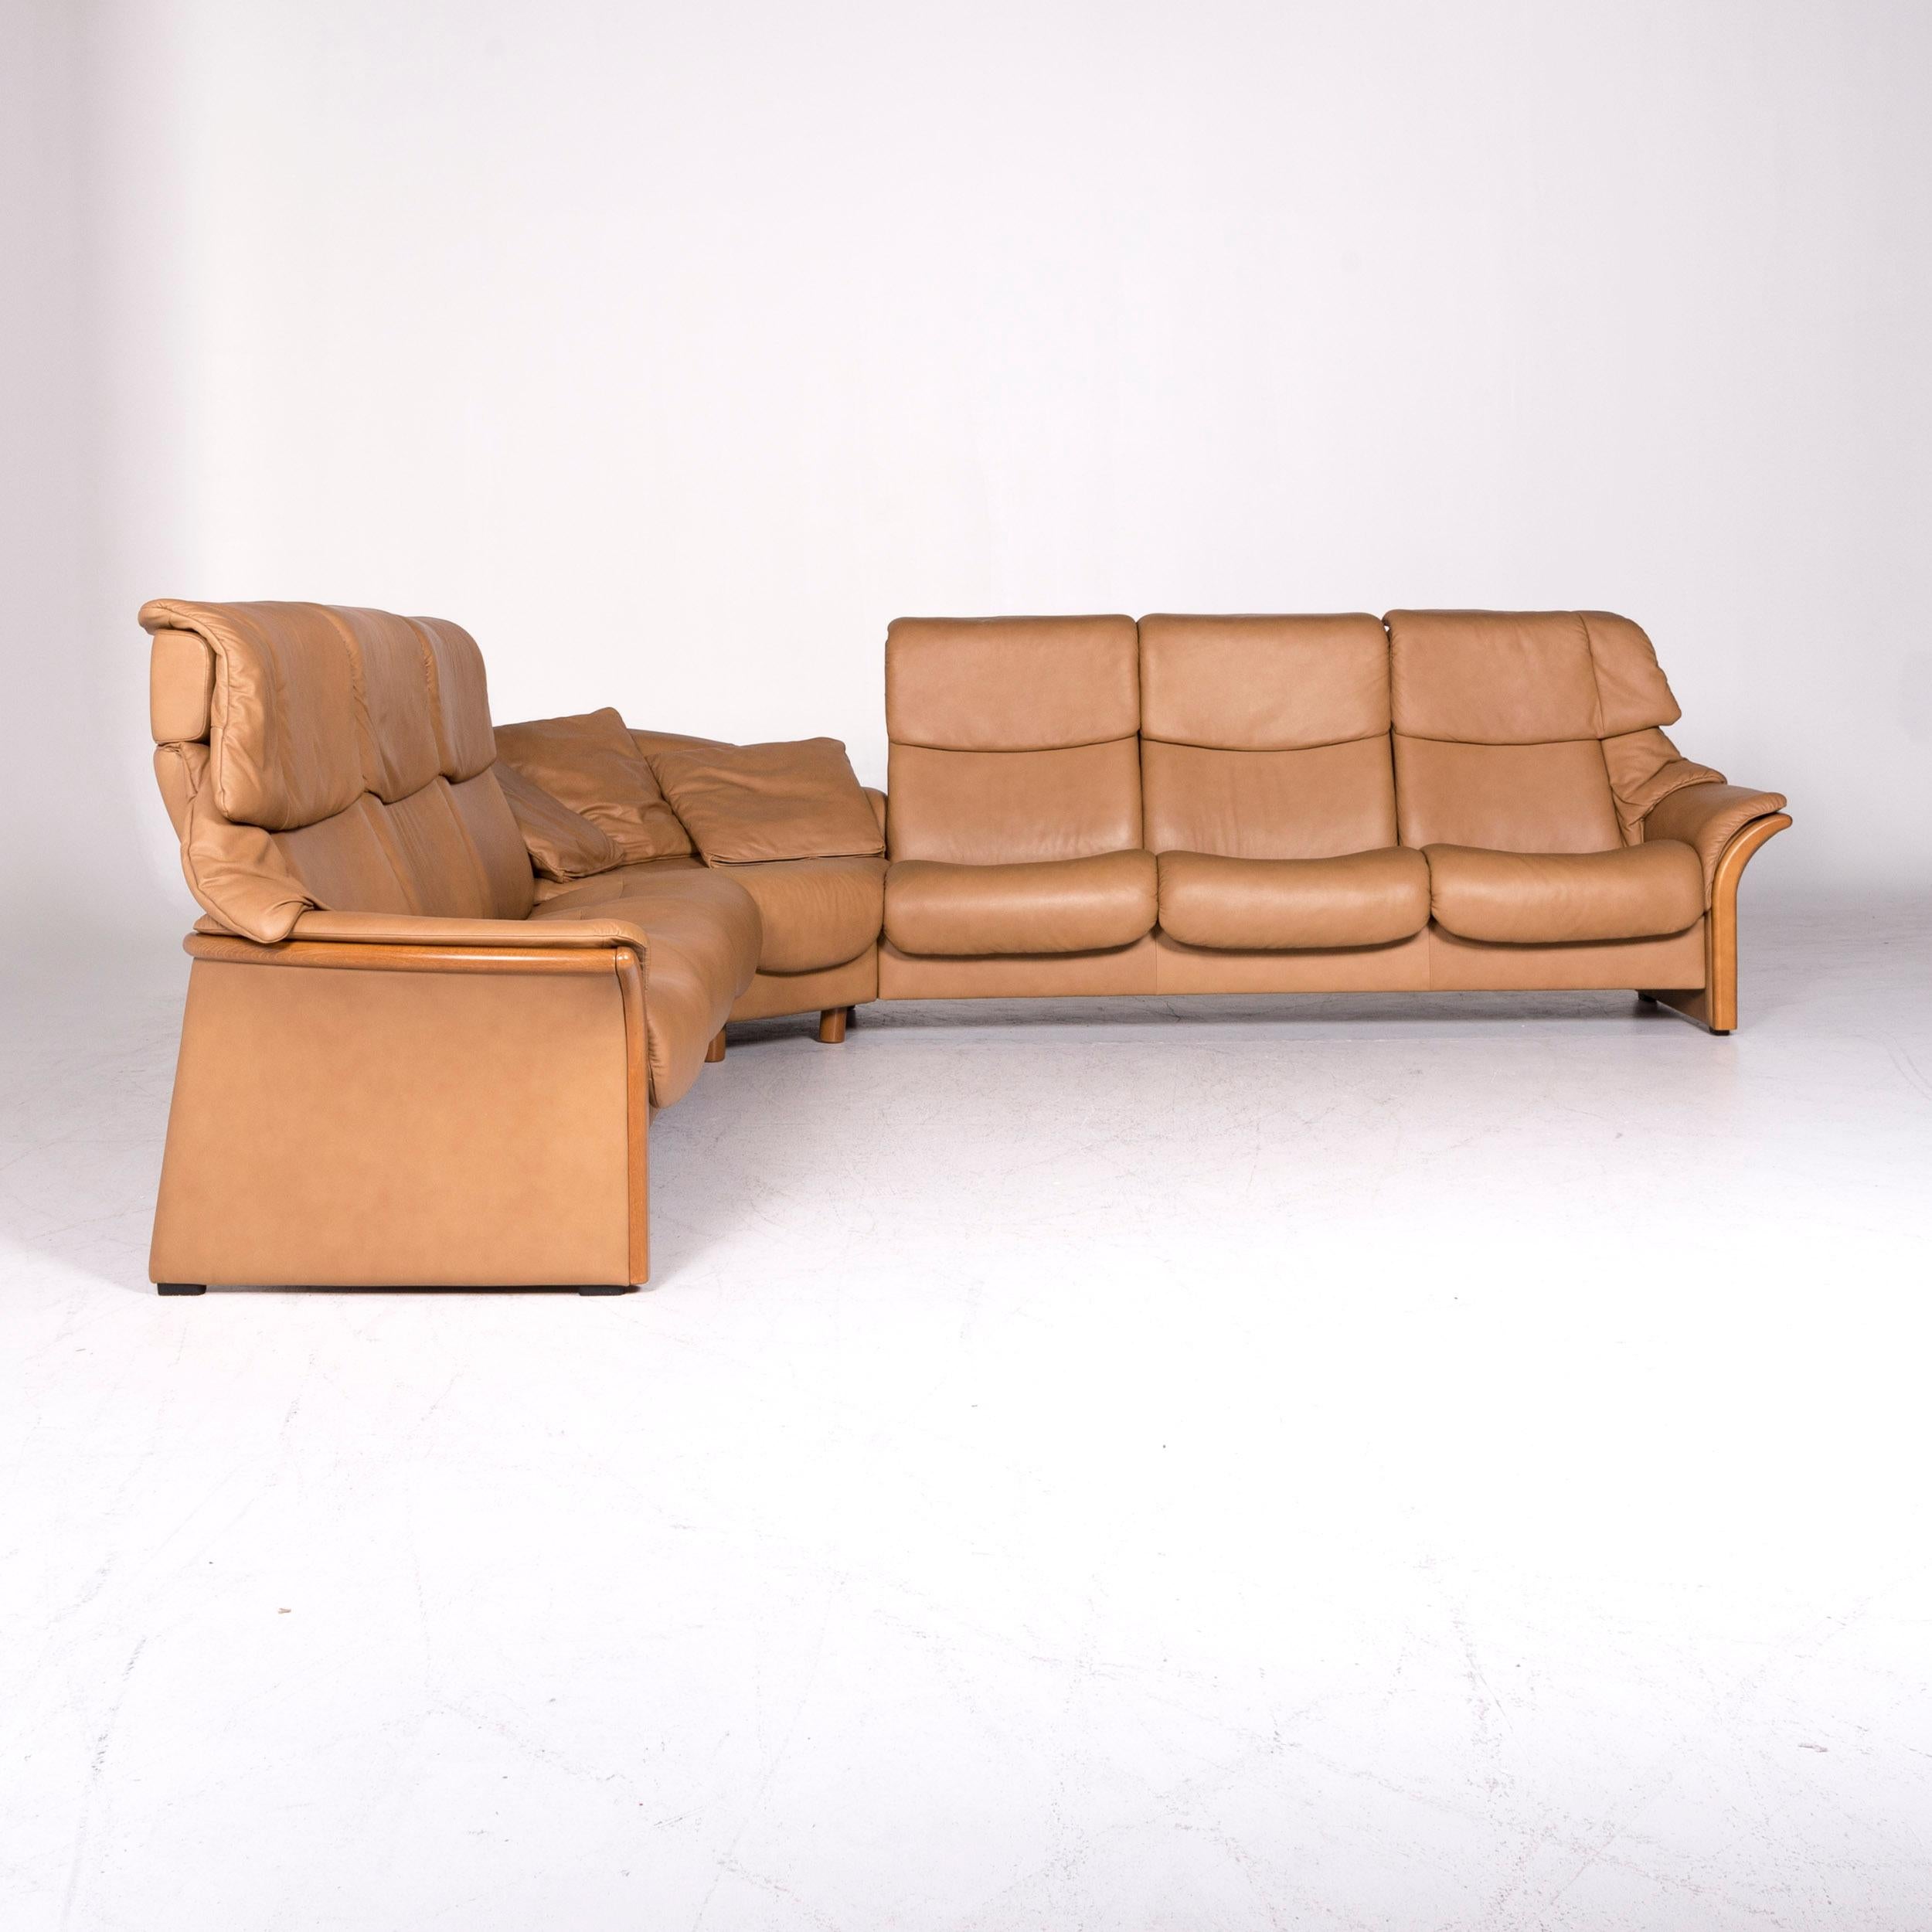 Stressless Eldorado Designer Leather Corner Sofa Beige Real Leather Sofa Couch 2